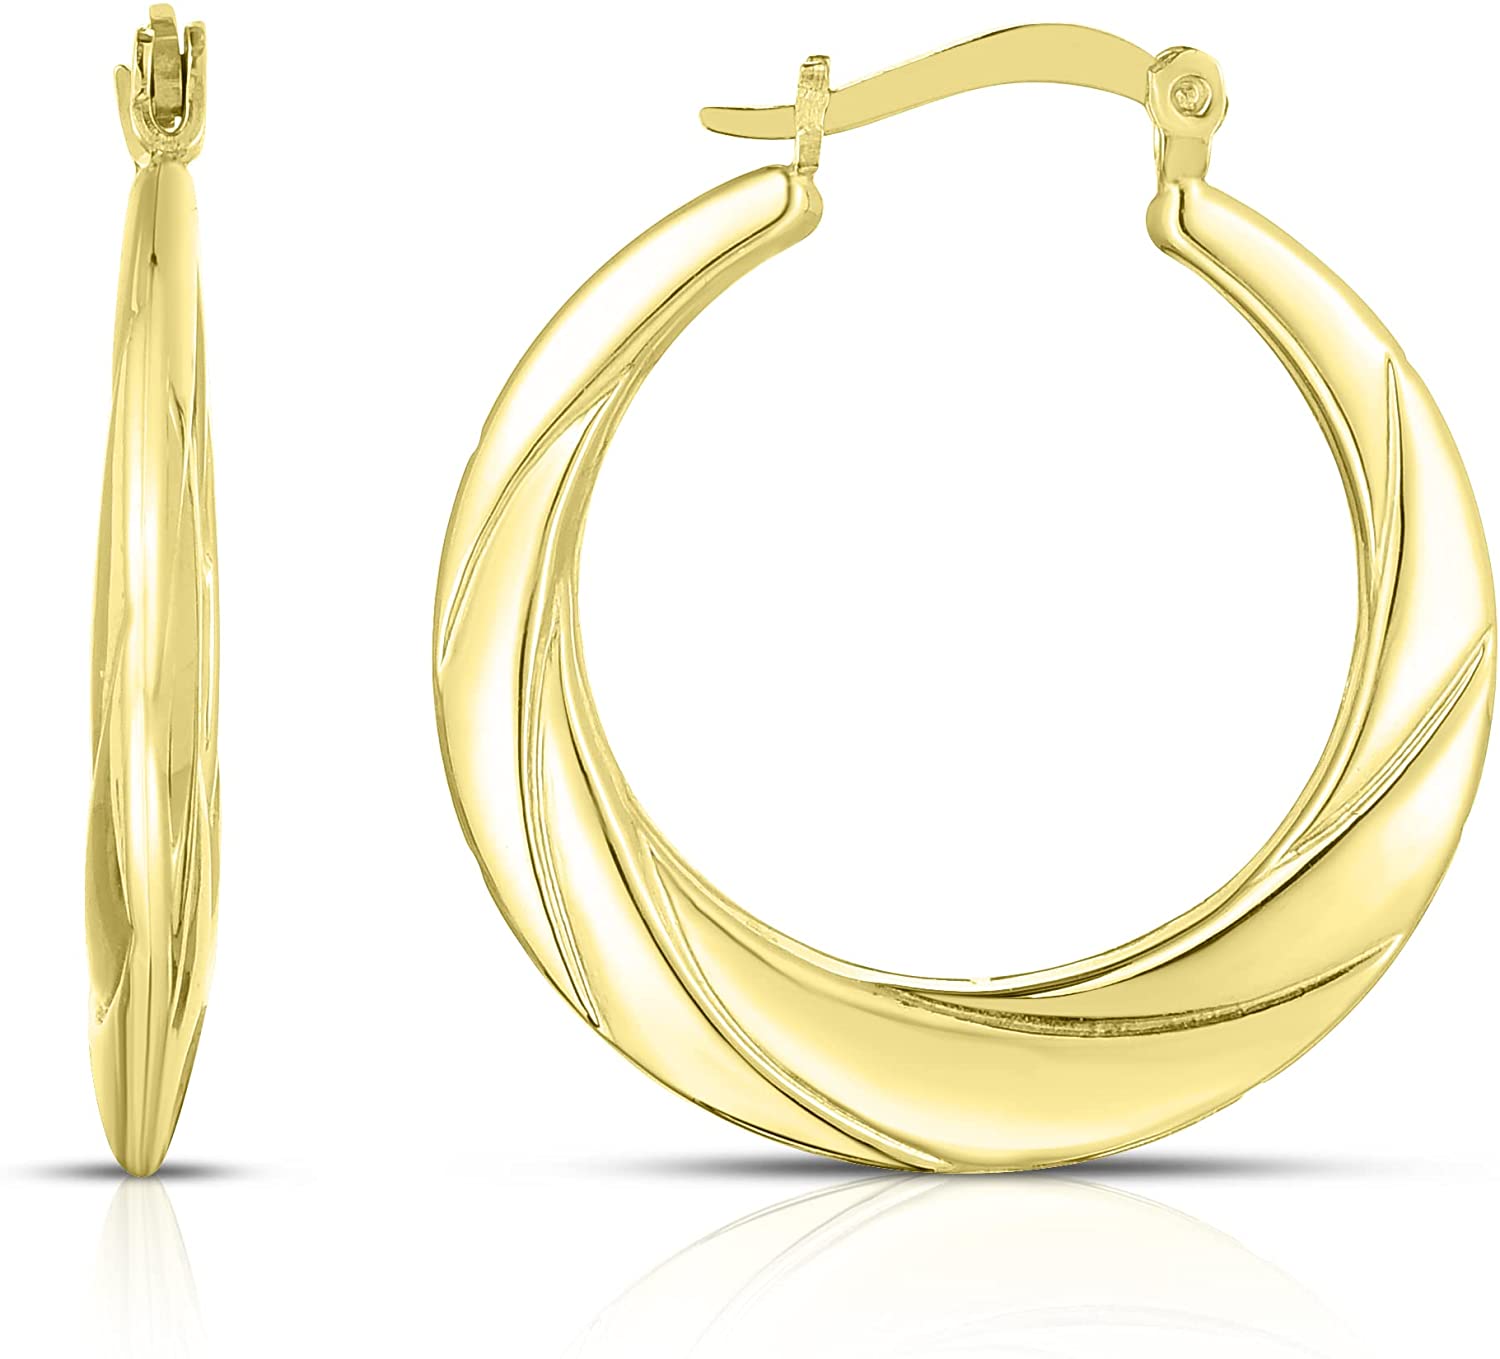 10k Yellow Gold High Polish and Twisted Swirl Cut Design Hoop Earrings